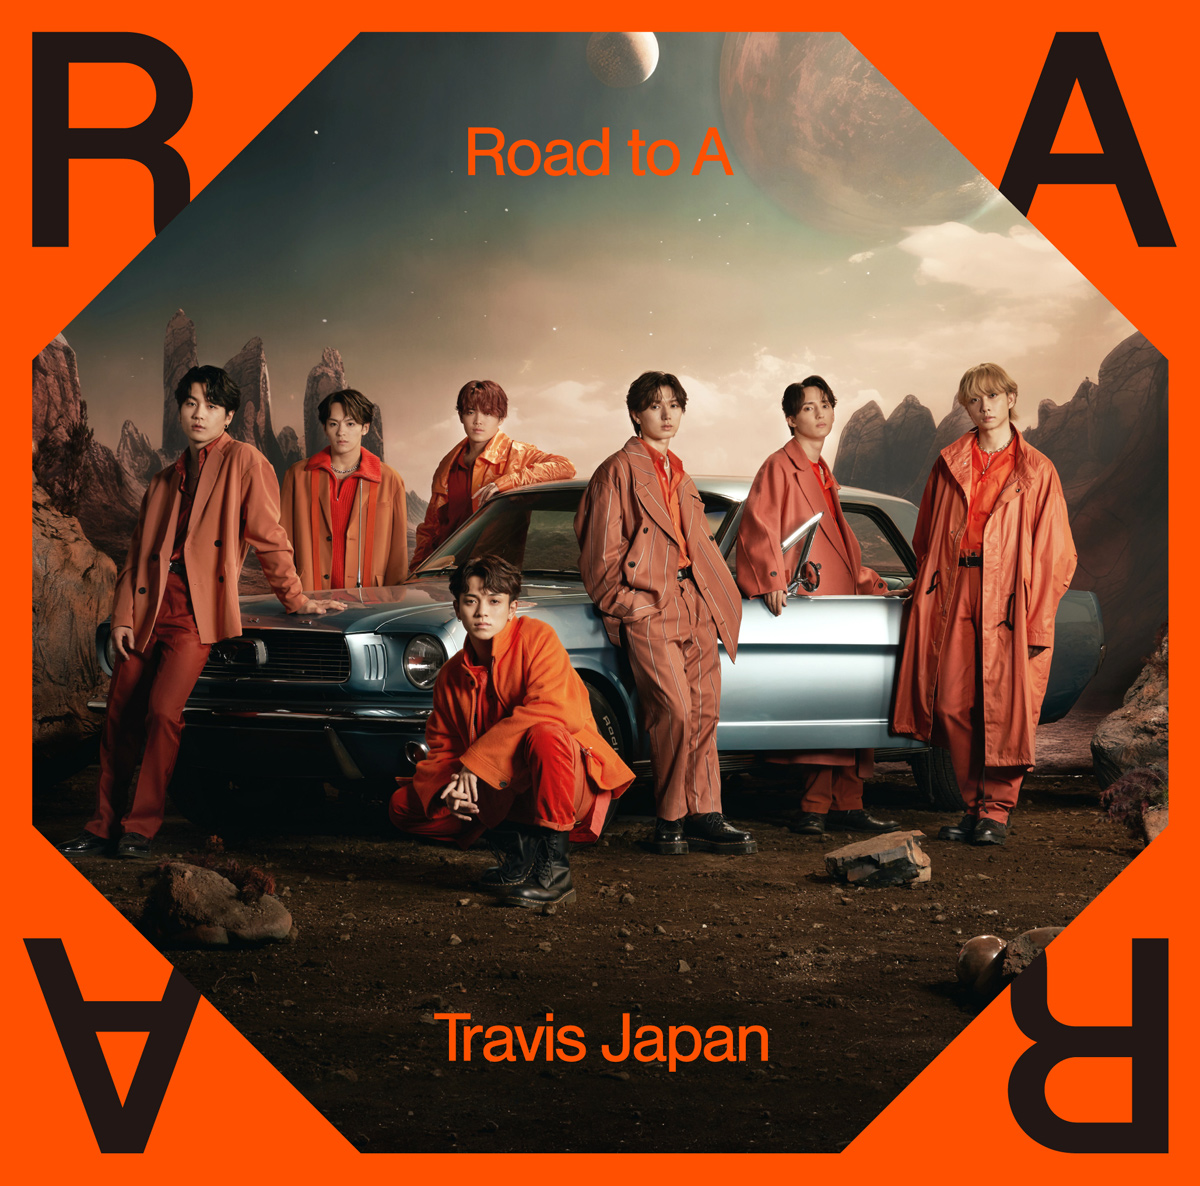 Travis Japan 初アルバム「Road to A」元日付オリコンで初登場1位確定